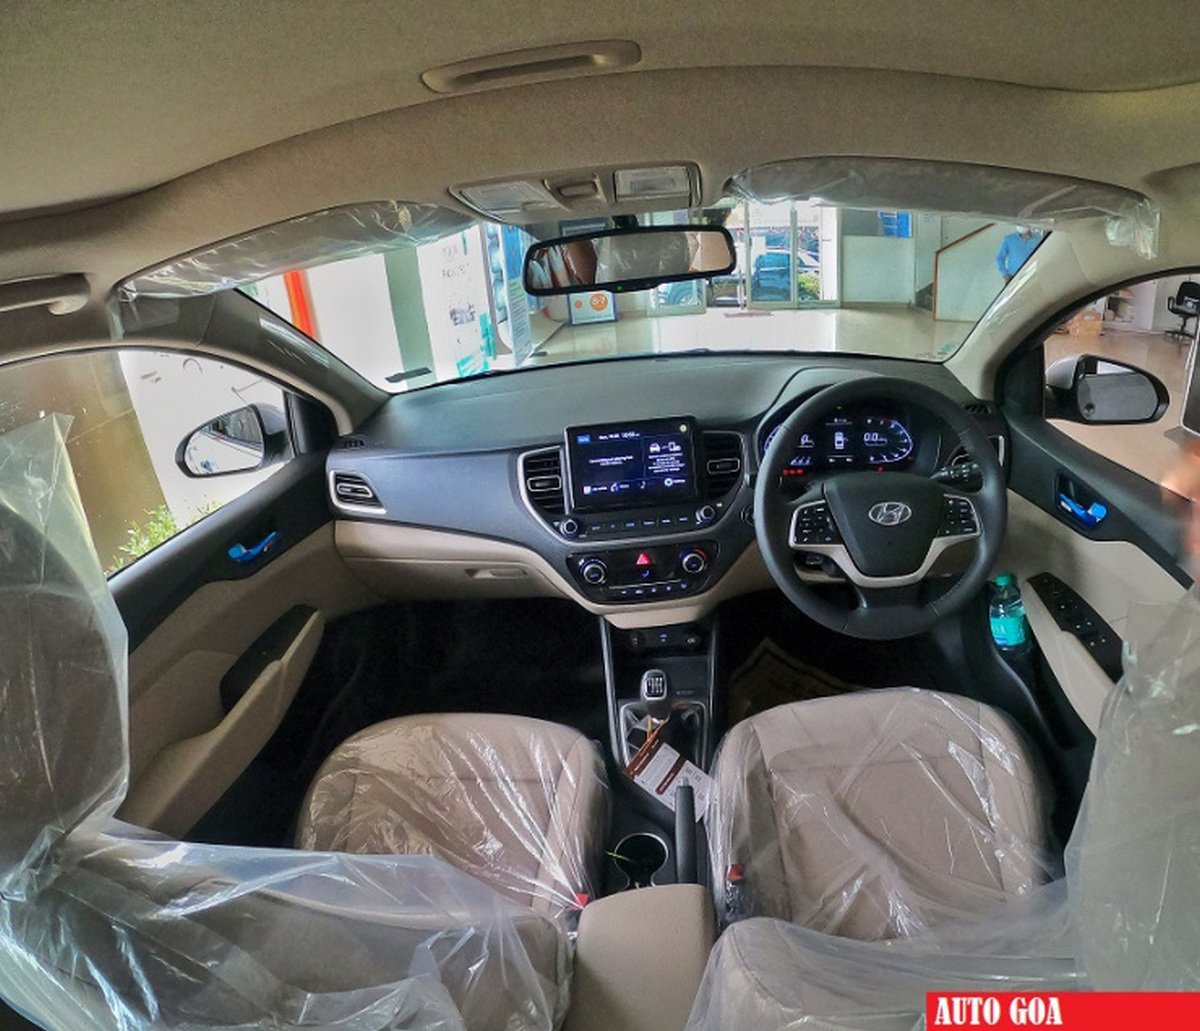 Inside-view-of-the-sedan